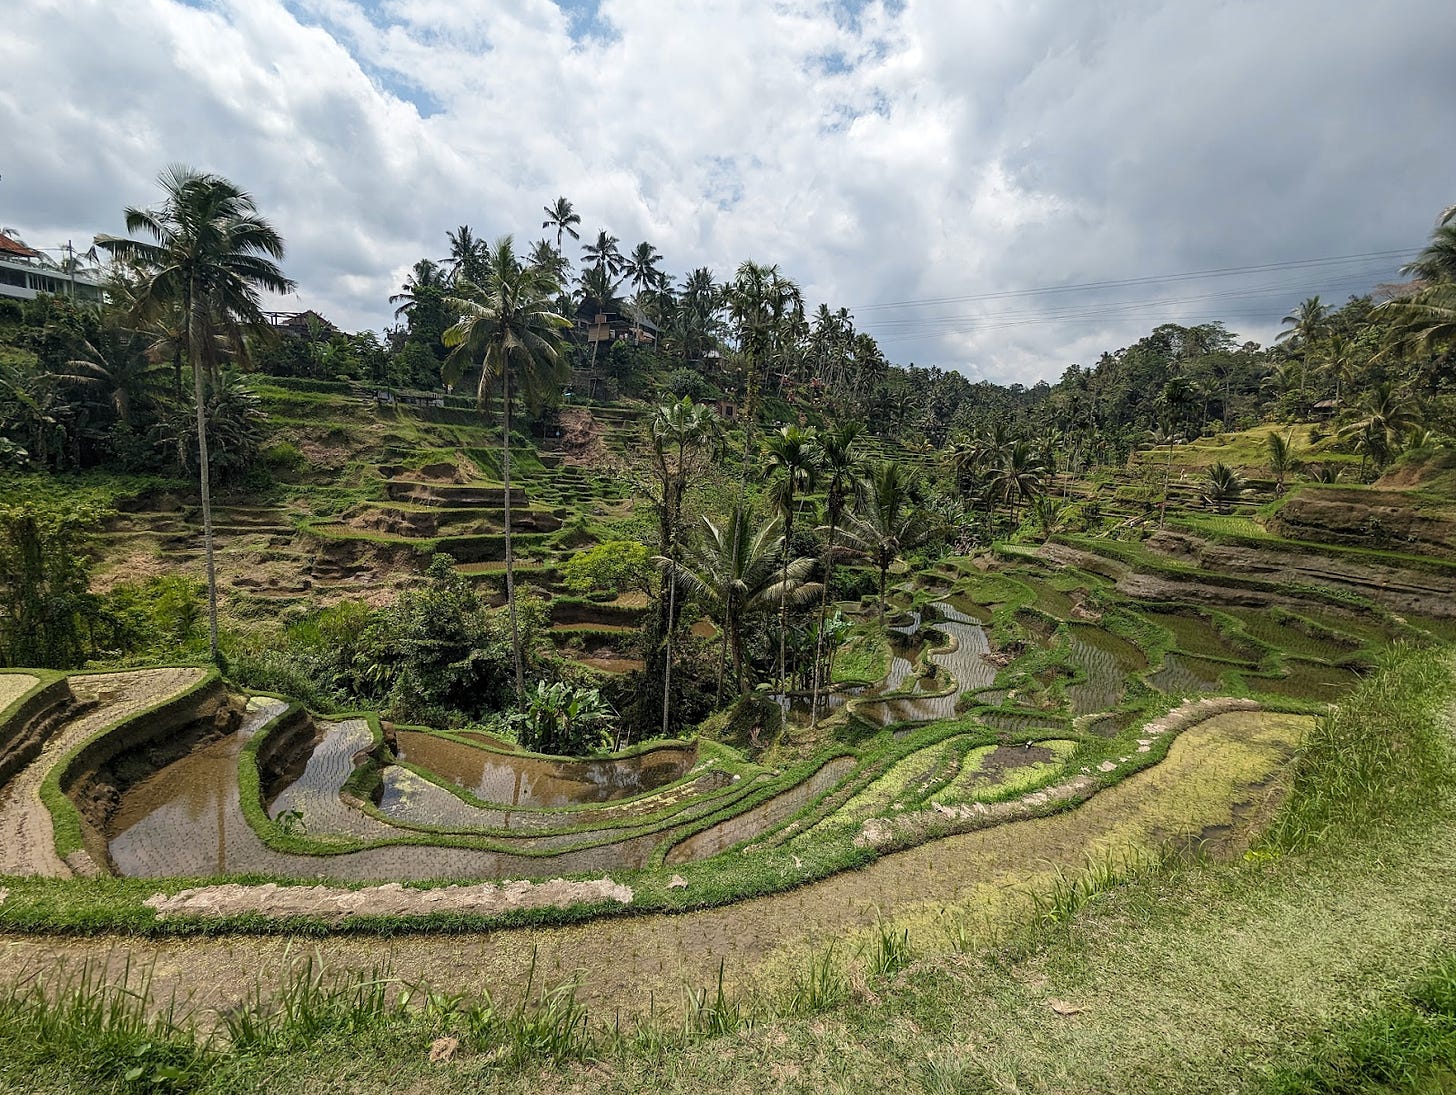 A landscape shot of a rice field